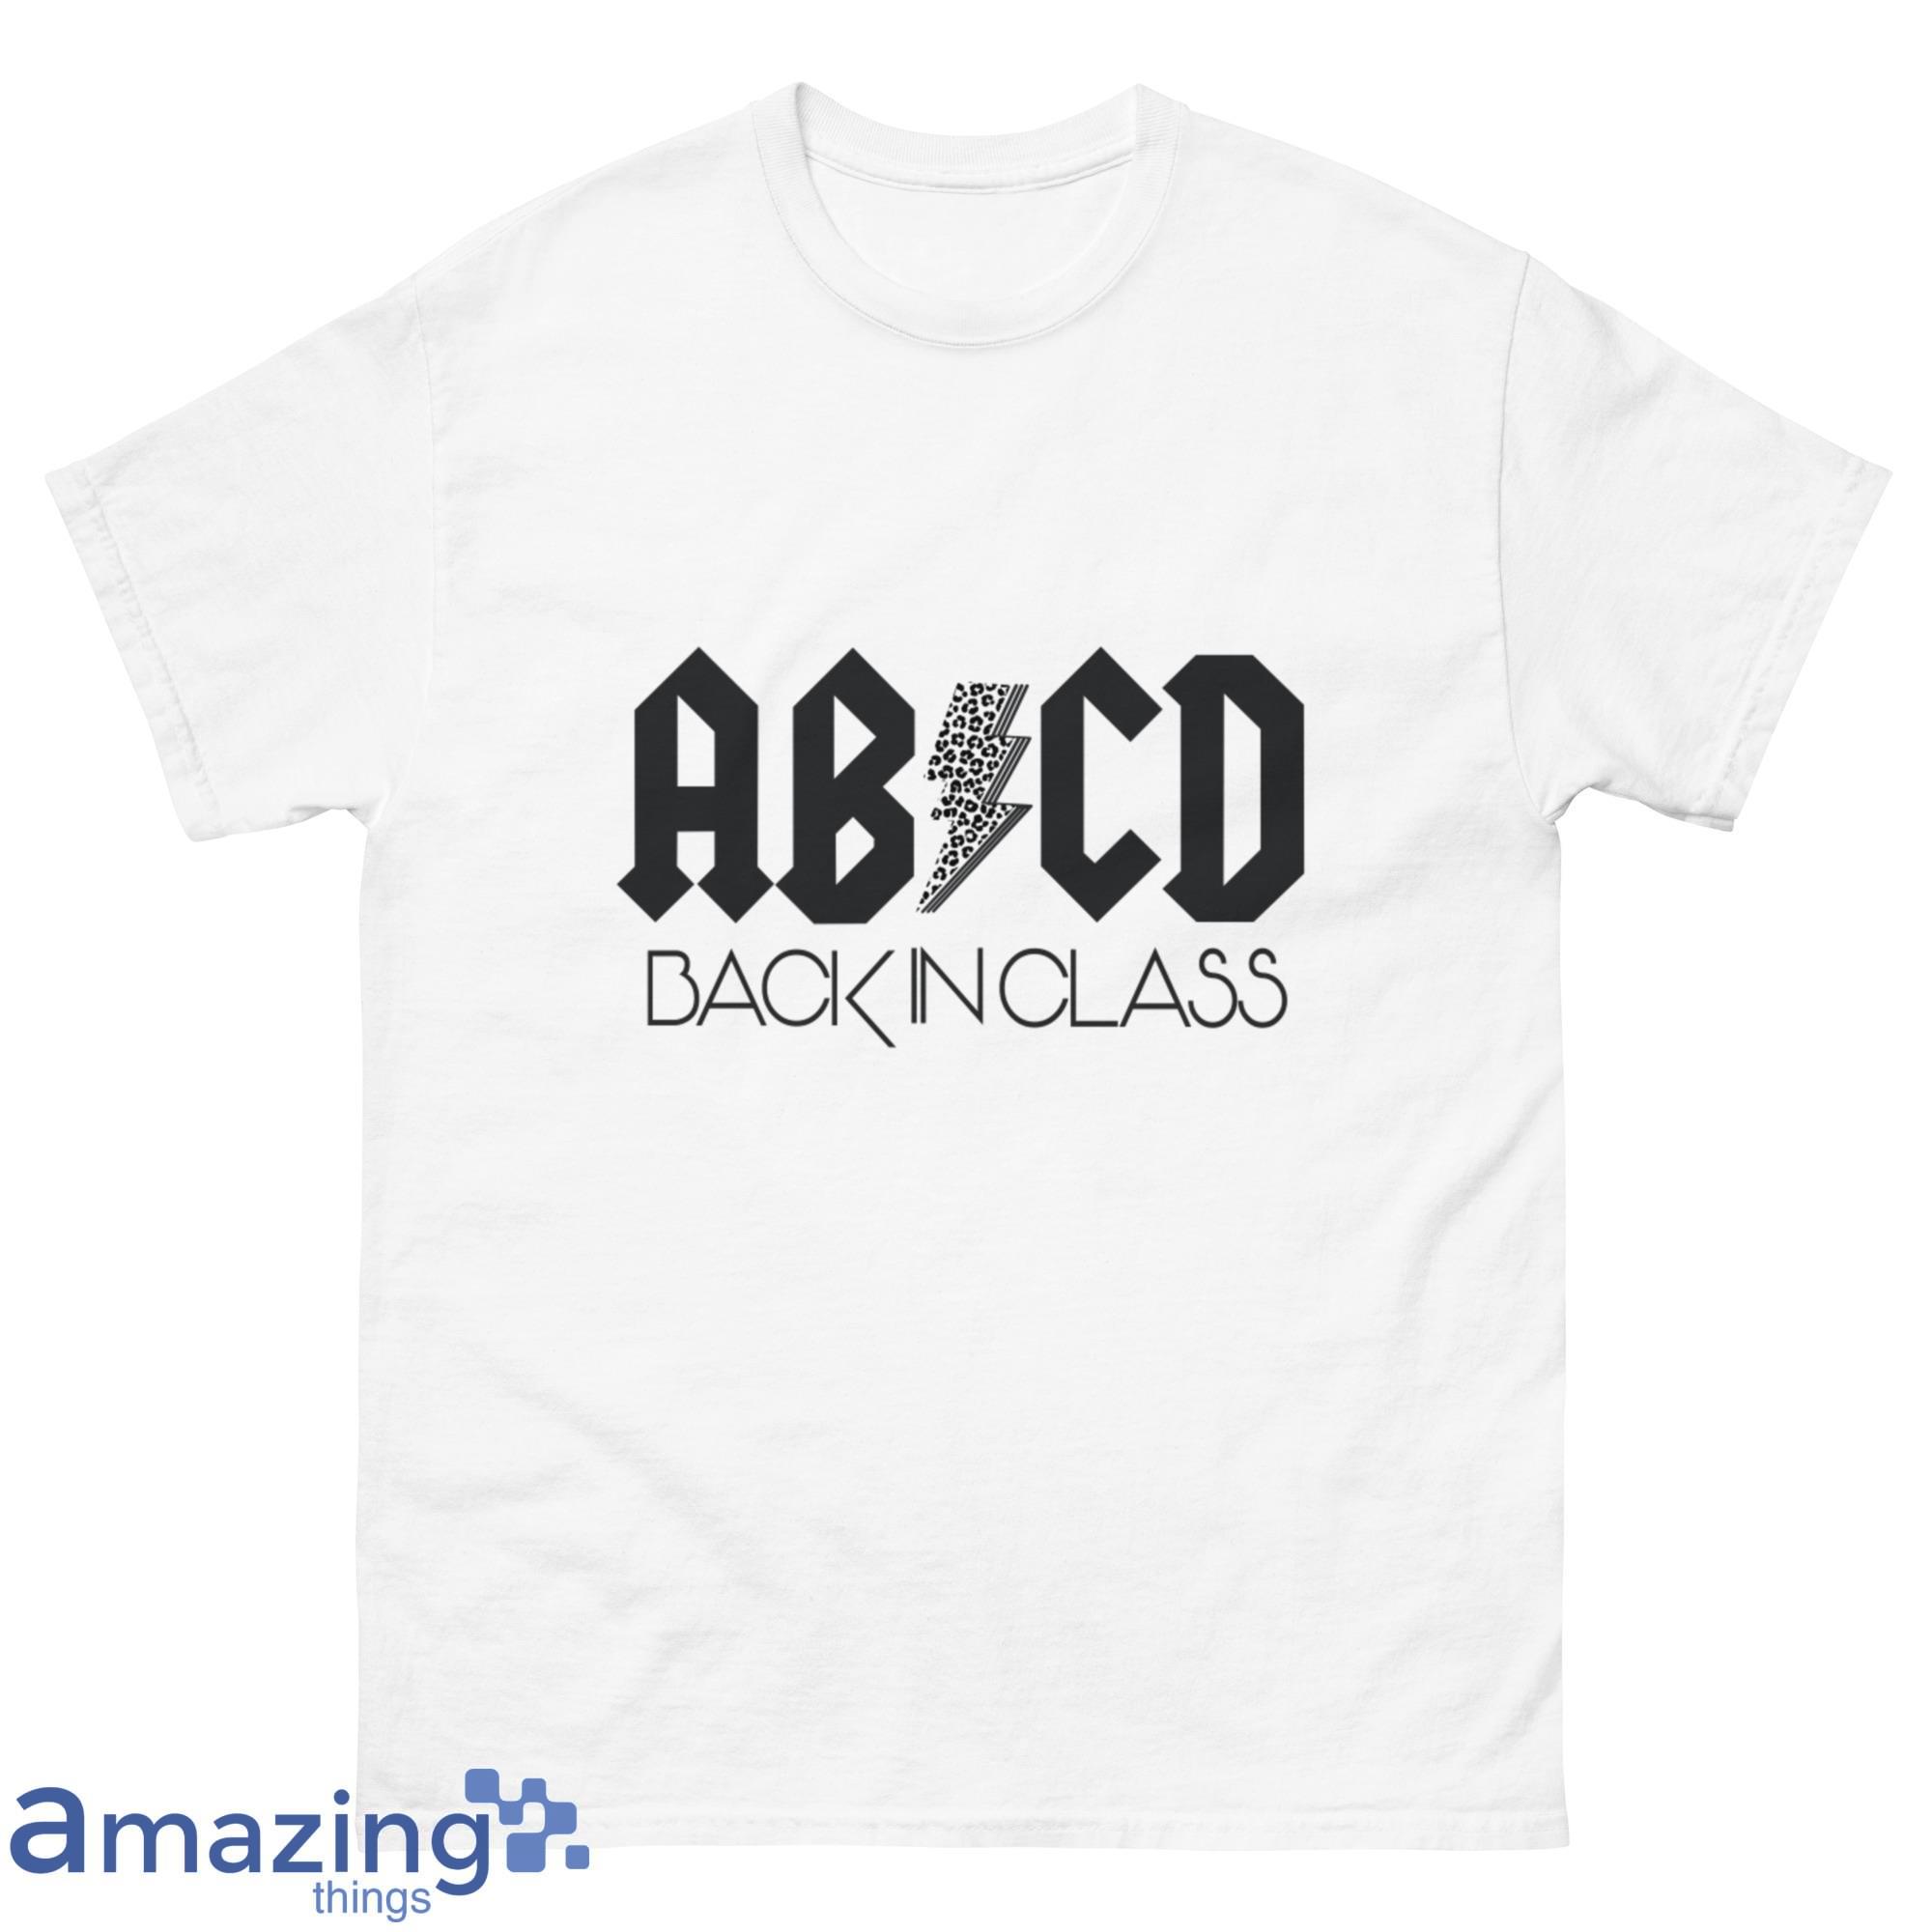 AB CD Backin Class Rock and Roll Parody AC Shirt - G500 Men’s Classic T-Shirt-1